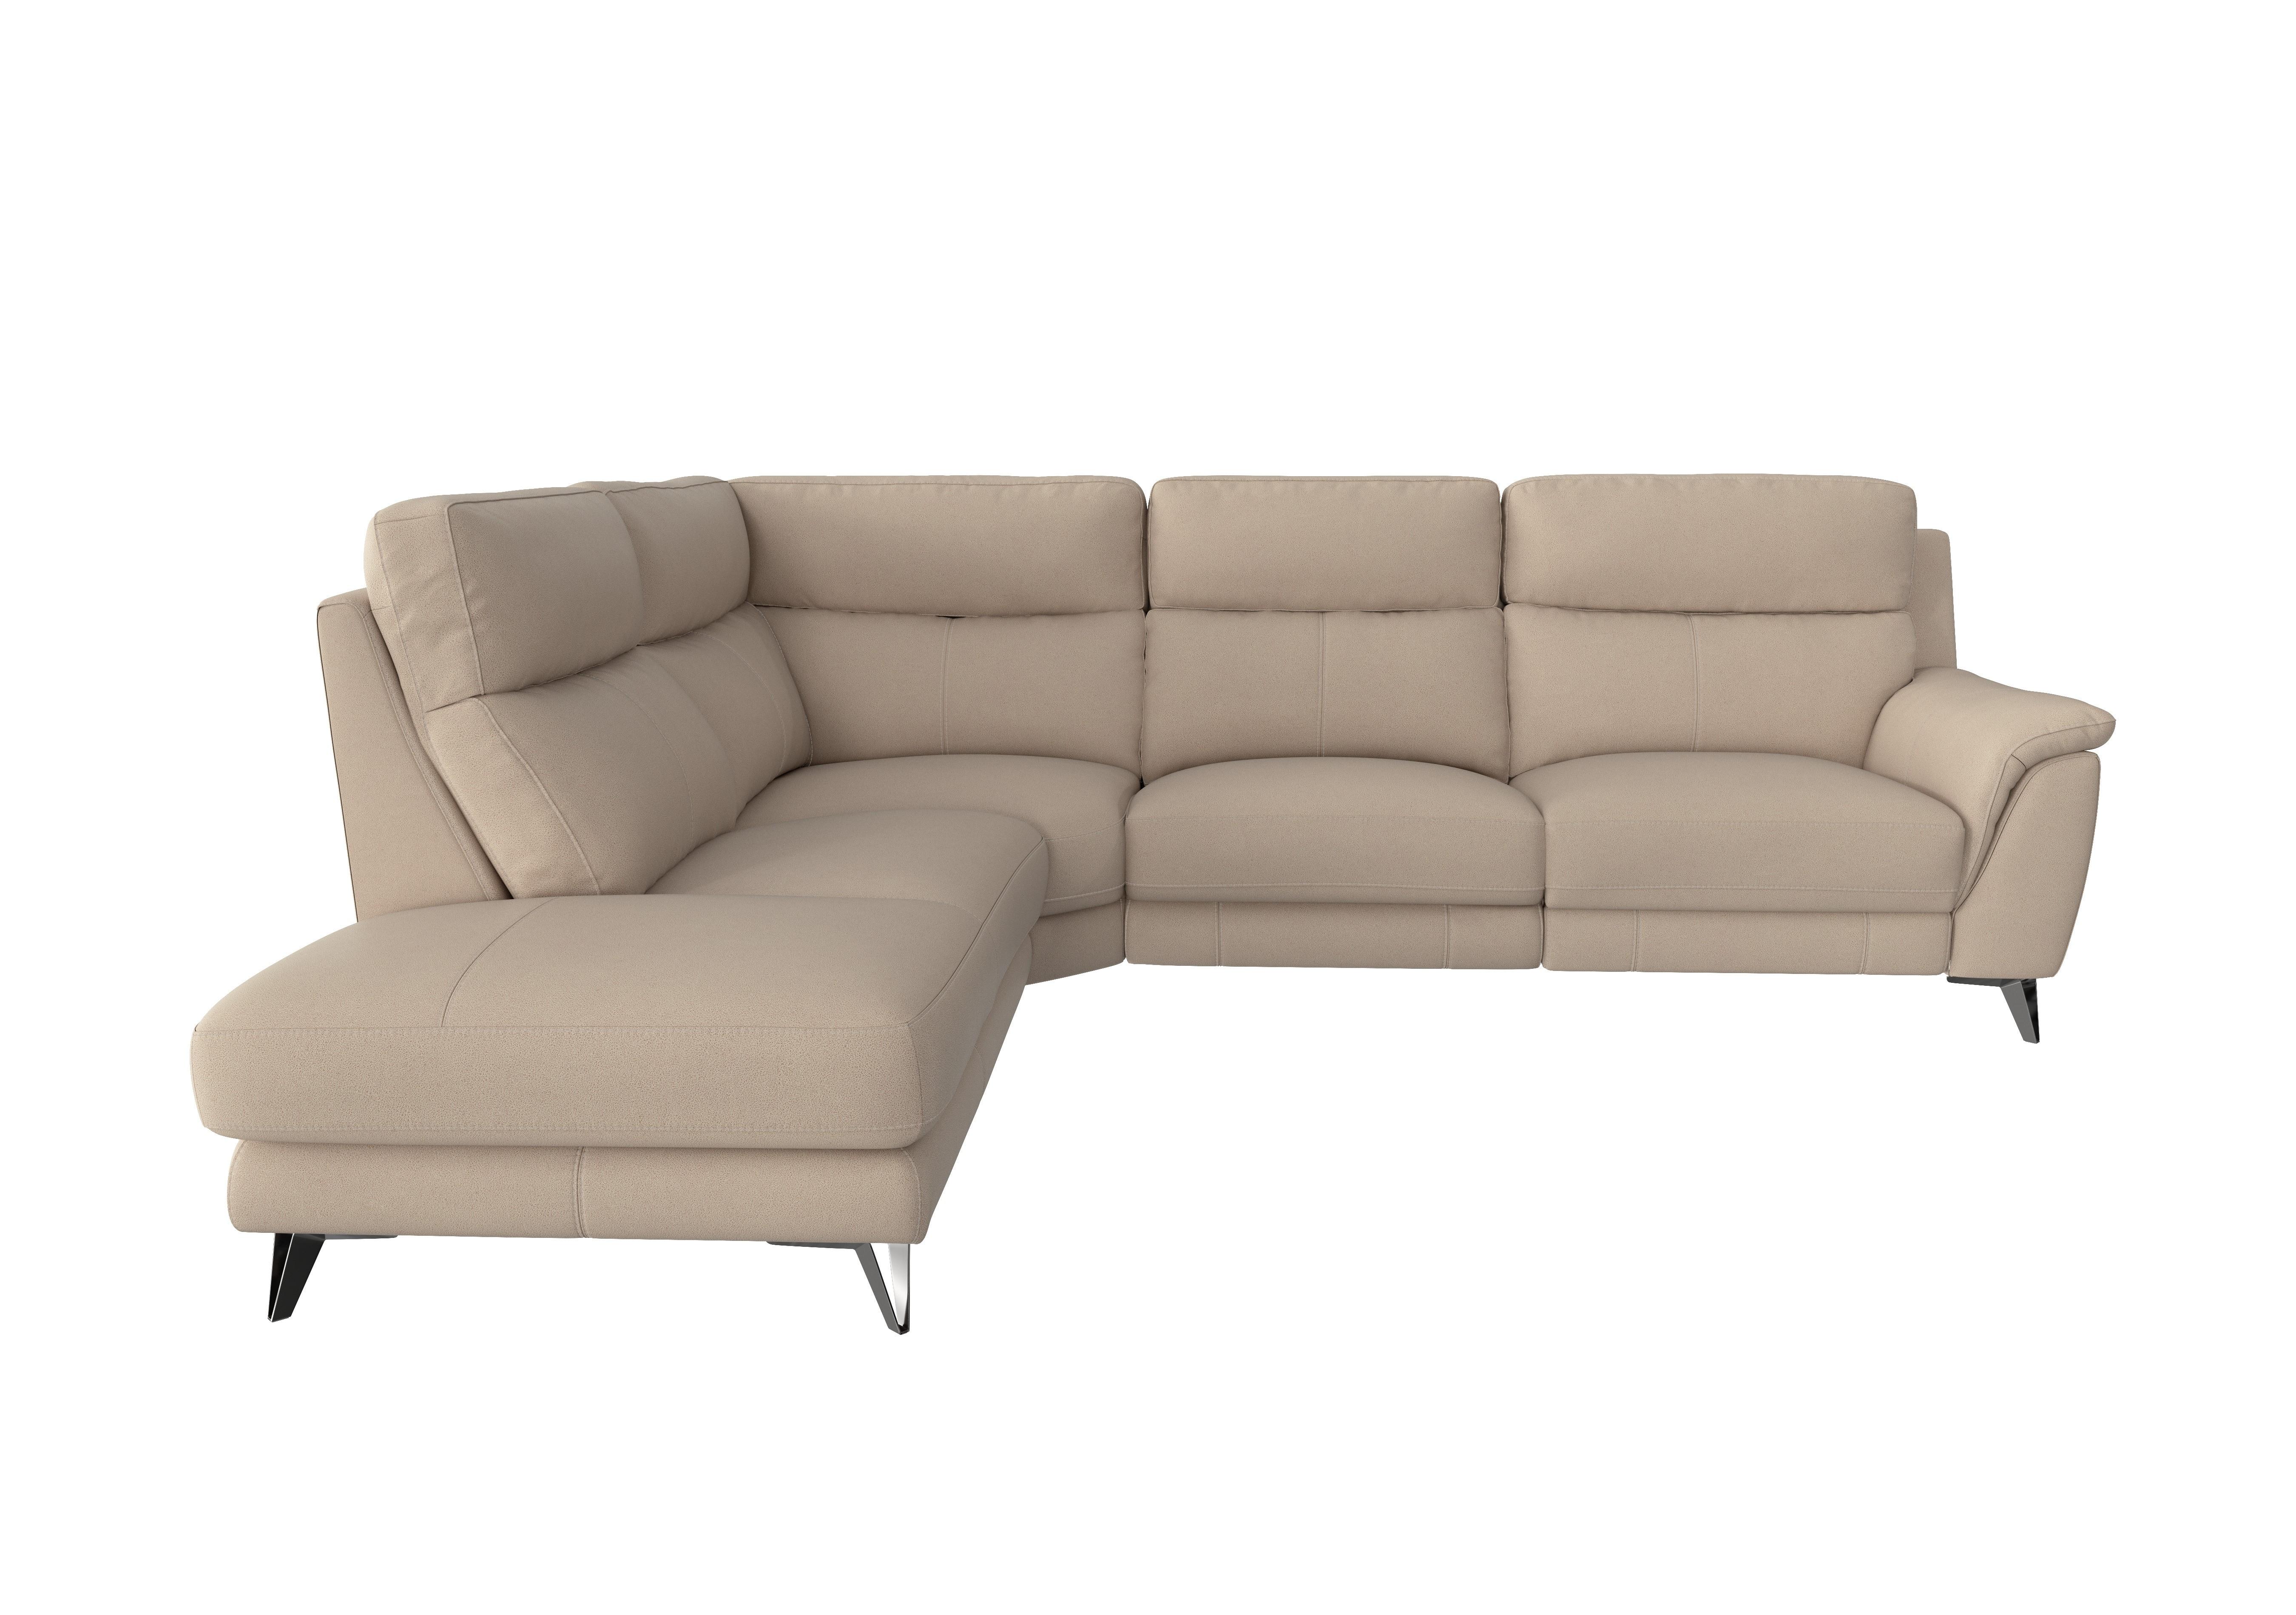 Contempo 3 Seater Chaise End Fabric Sofa in Bfa-Blj-R20 Bisque on Furniture Village